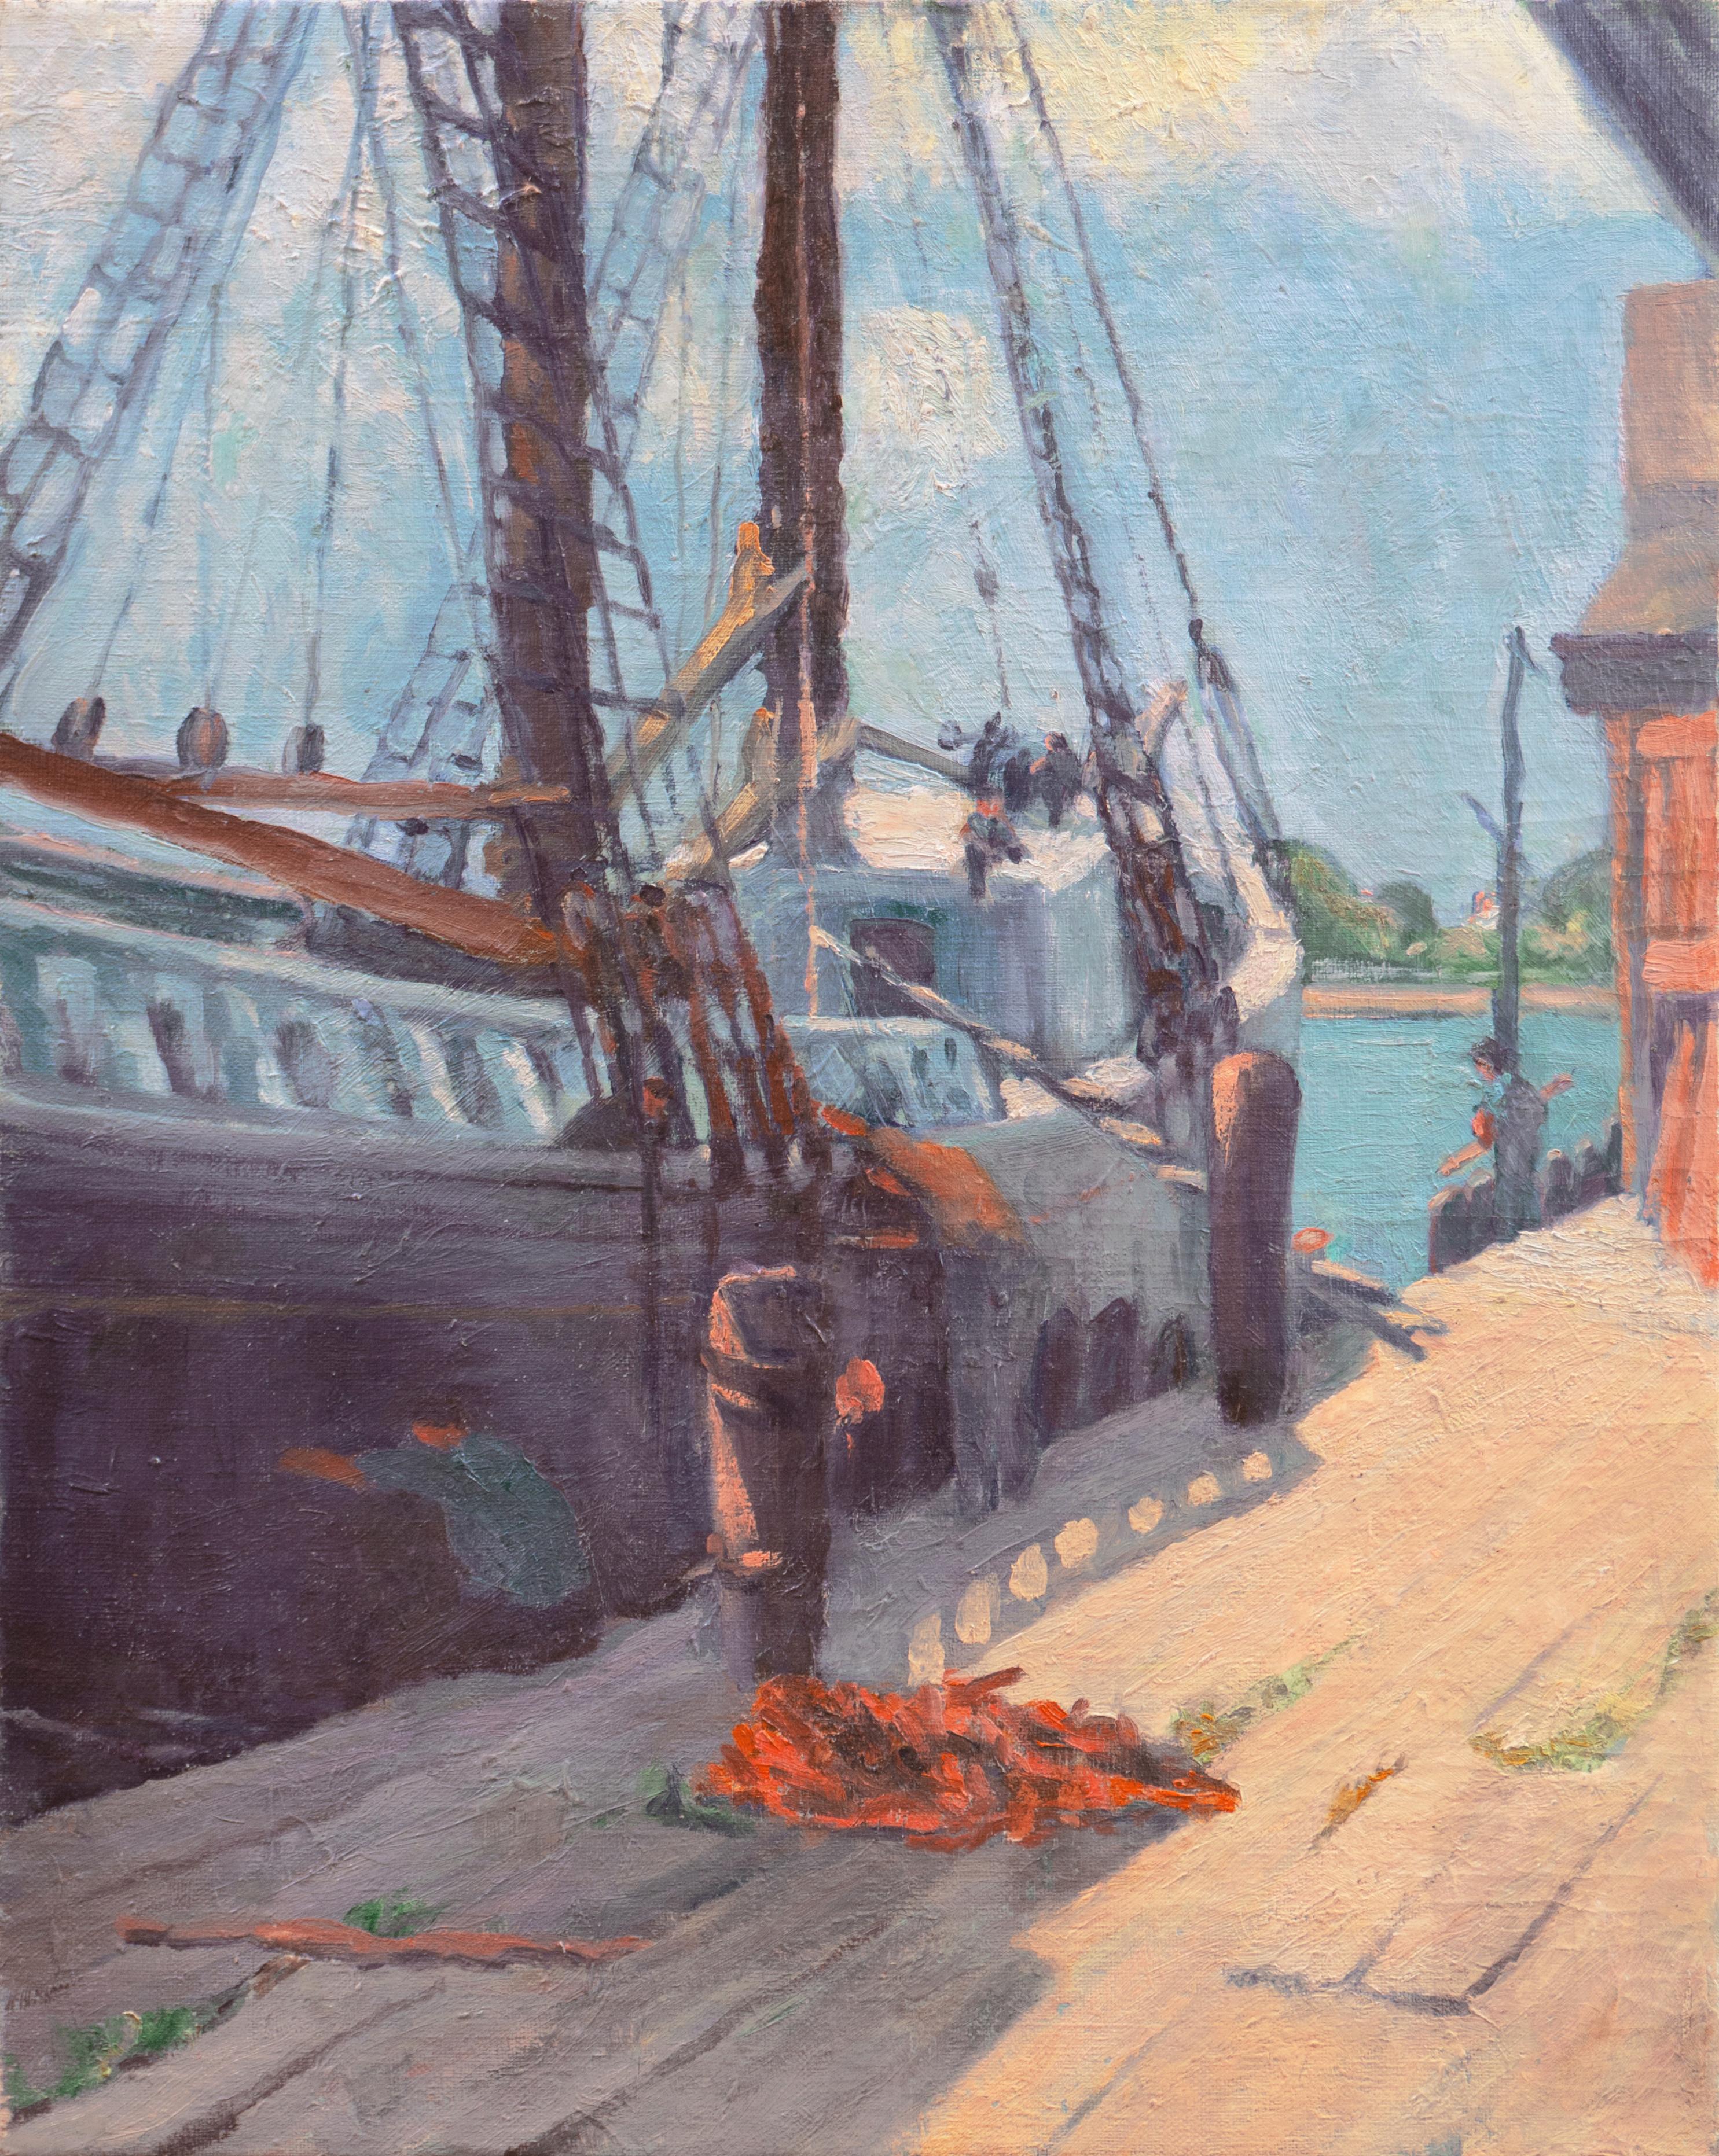 'Caulking the Seams', American Impressionist School Oil, Sailing Boat, Schooner 